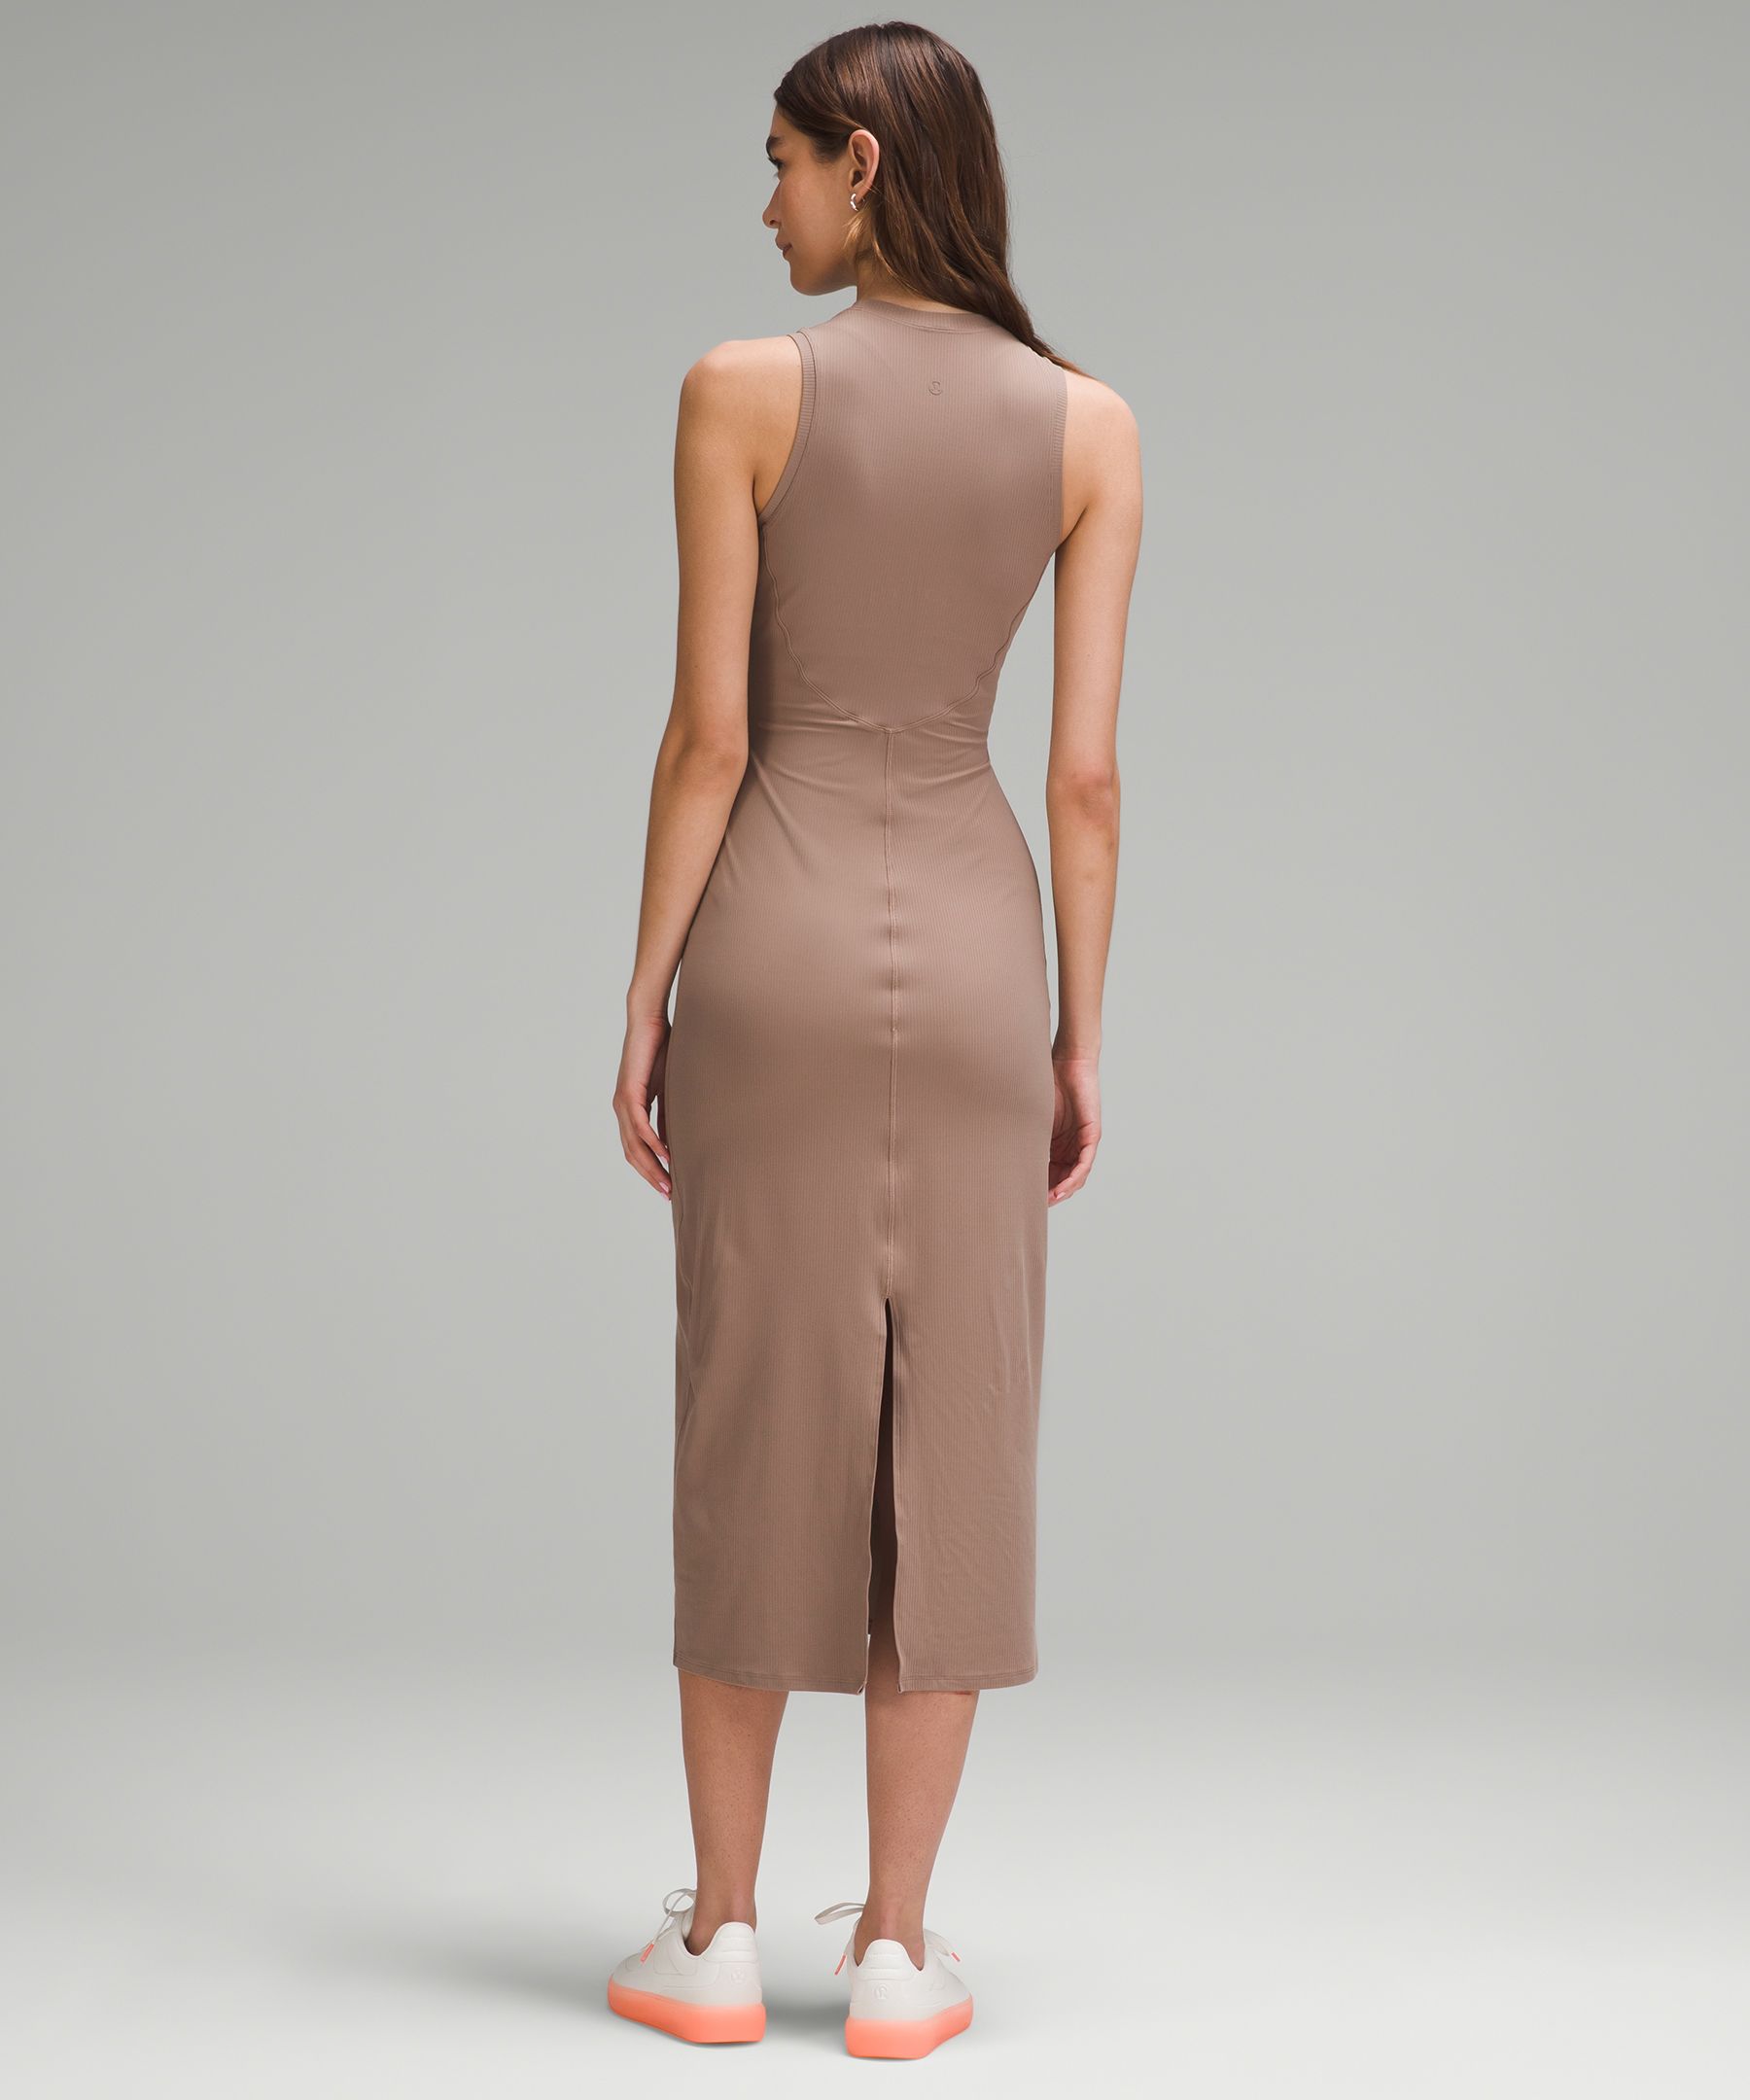 Buy Lululemon Dresses Online - Lululemon Factory Sale